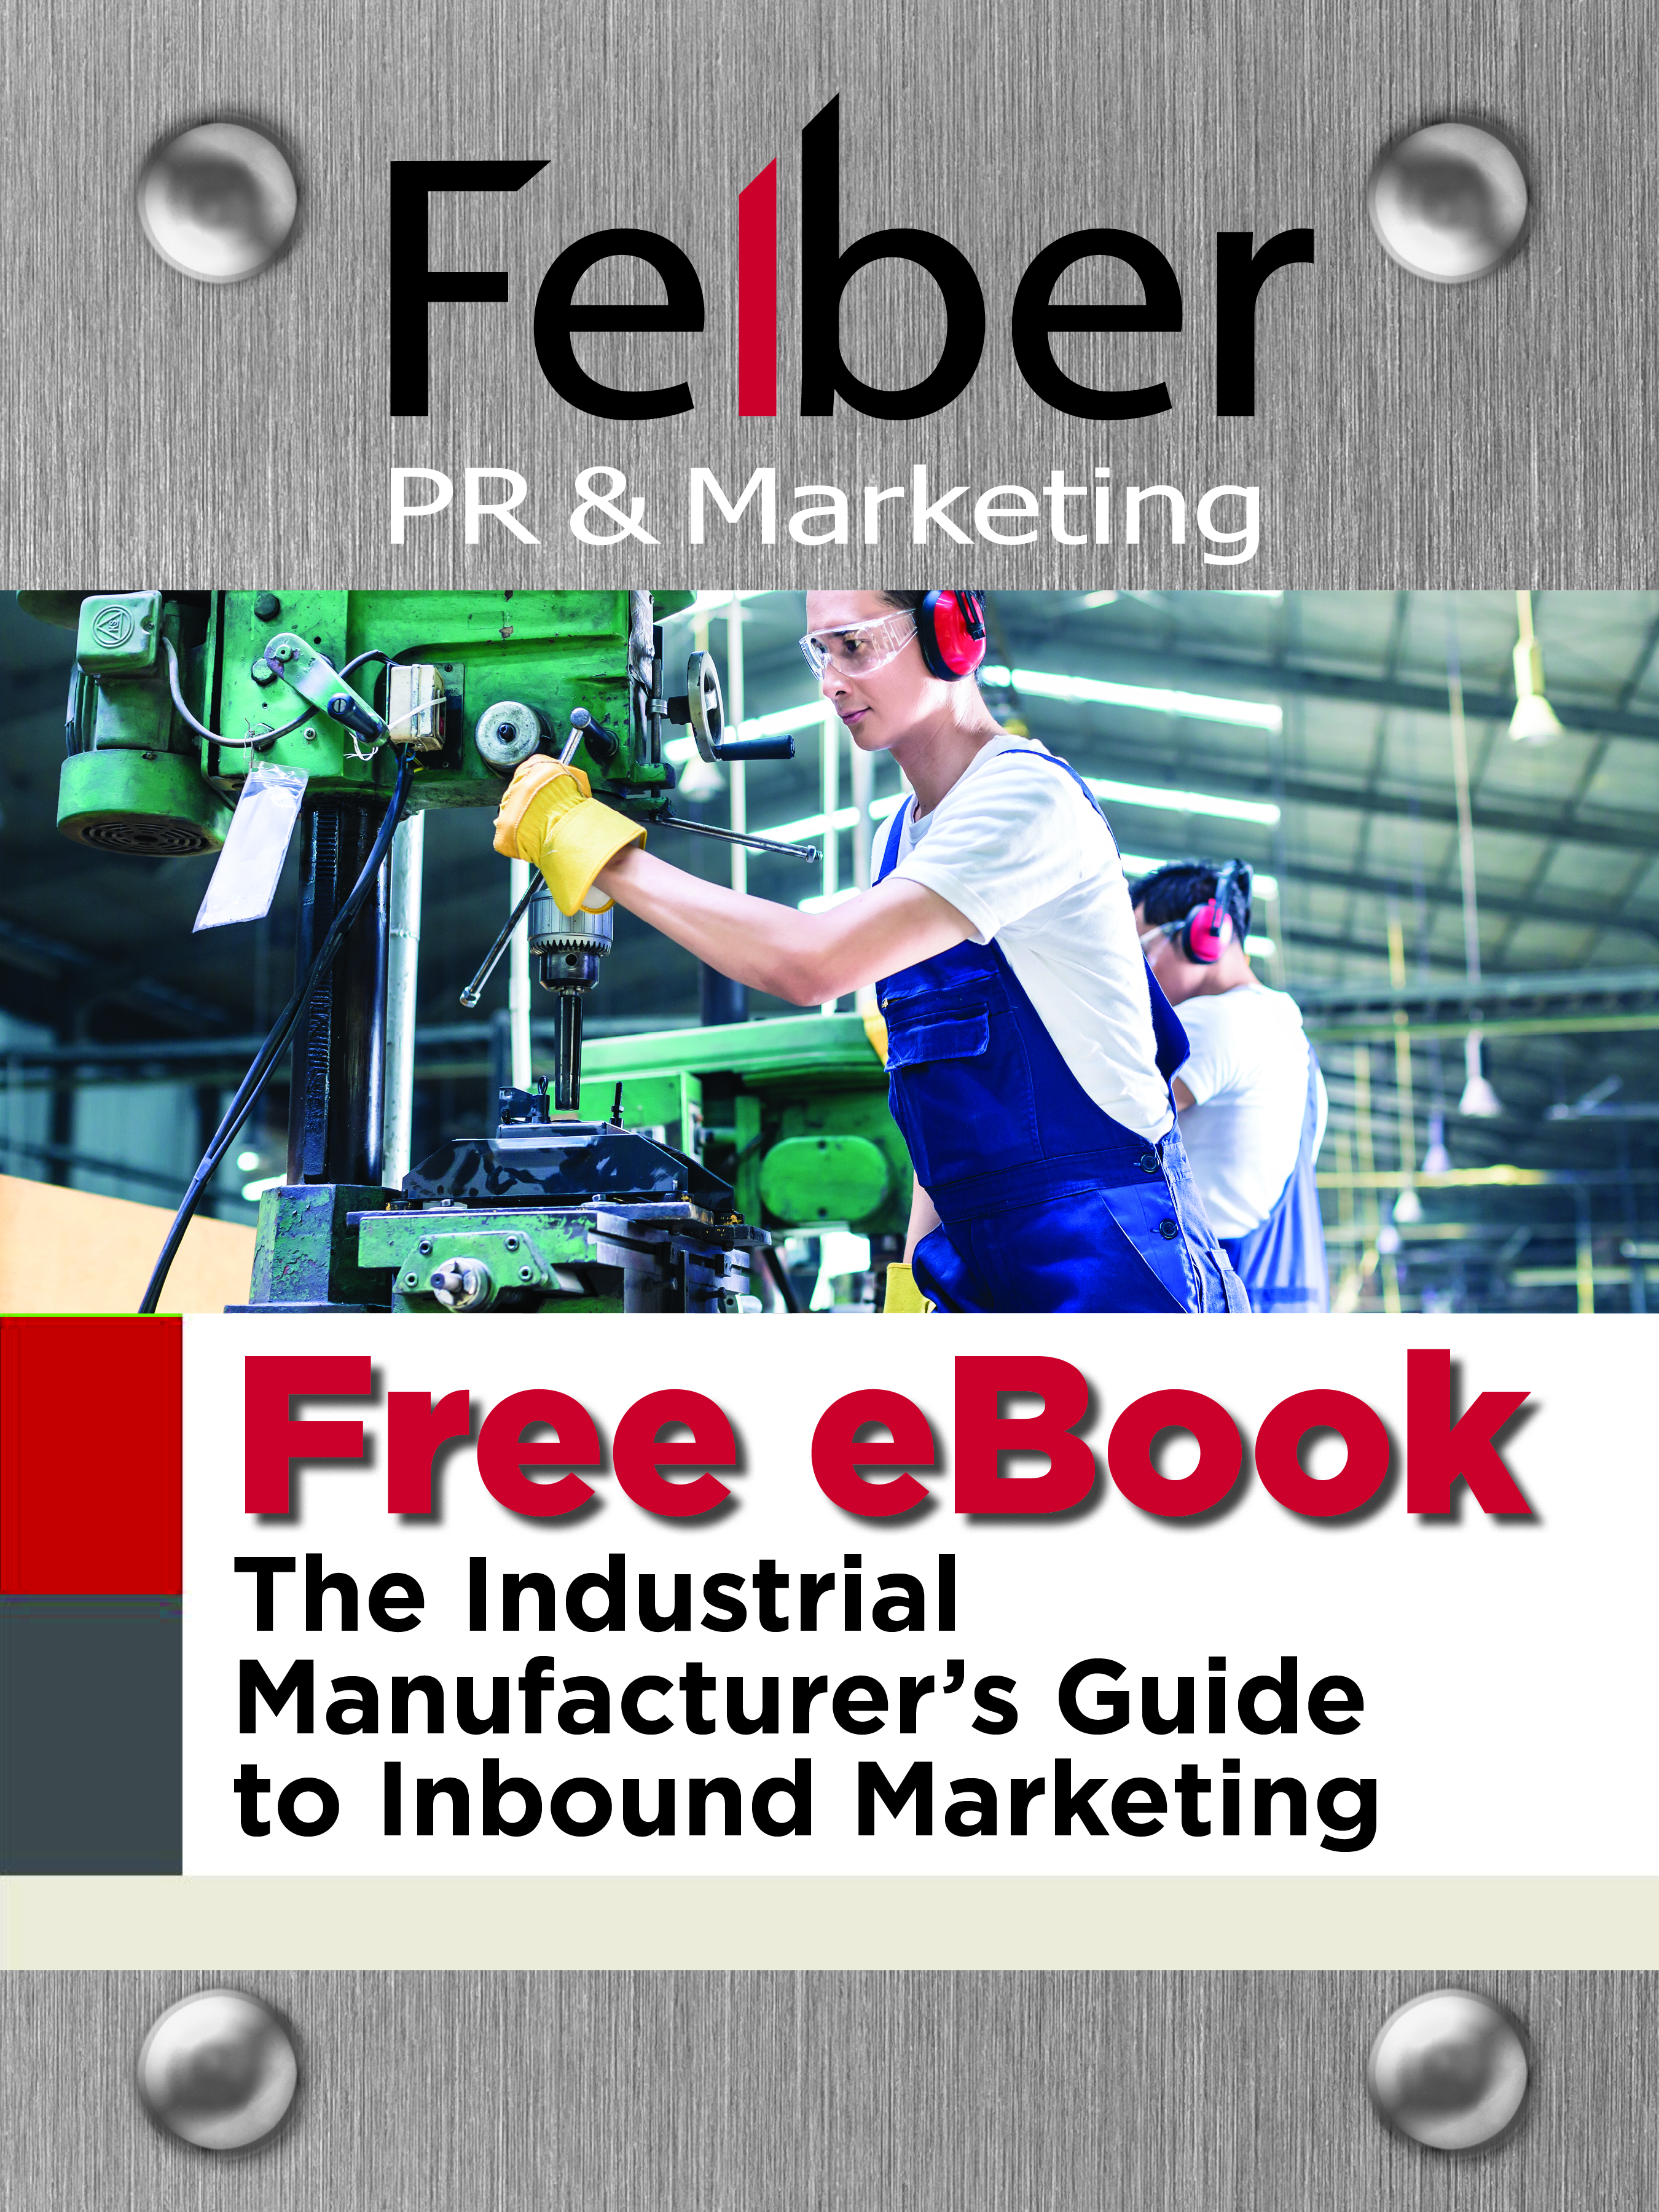 industrial-manufacturers-guide-inbound-marketing